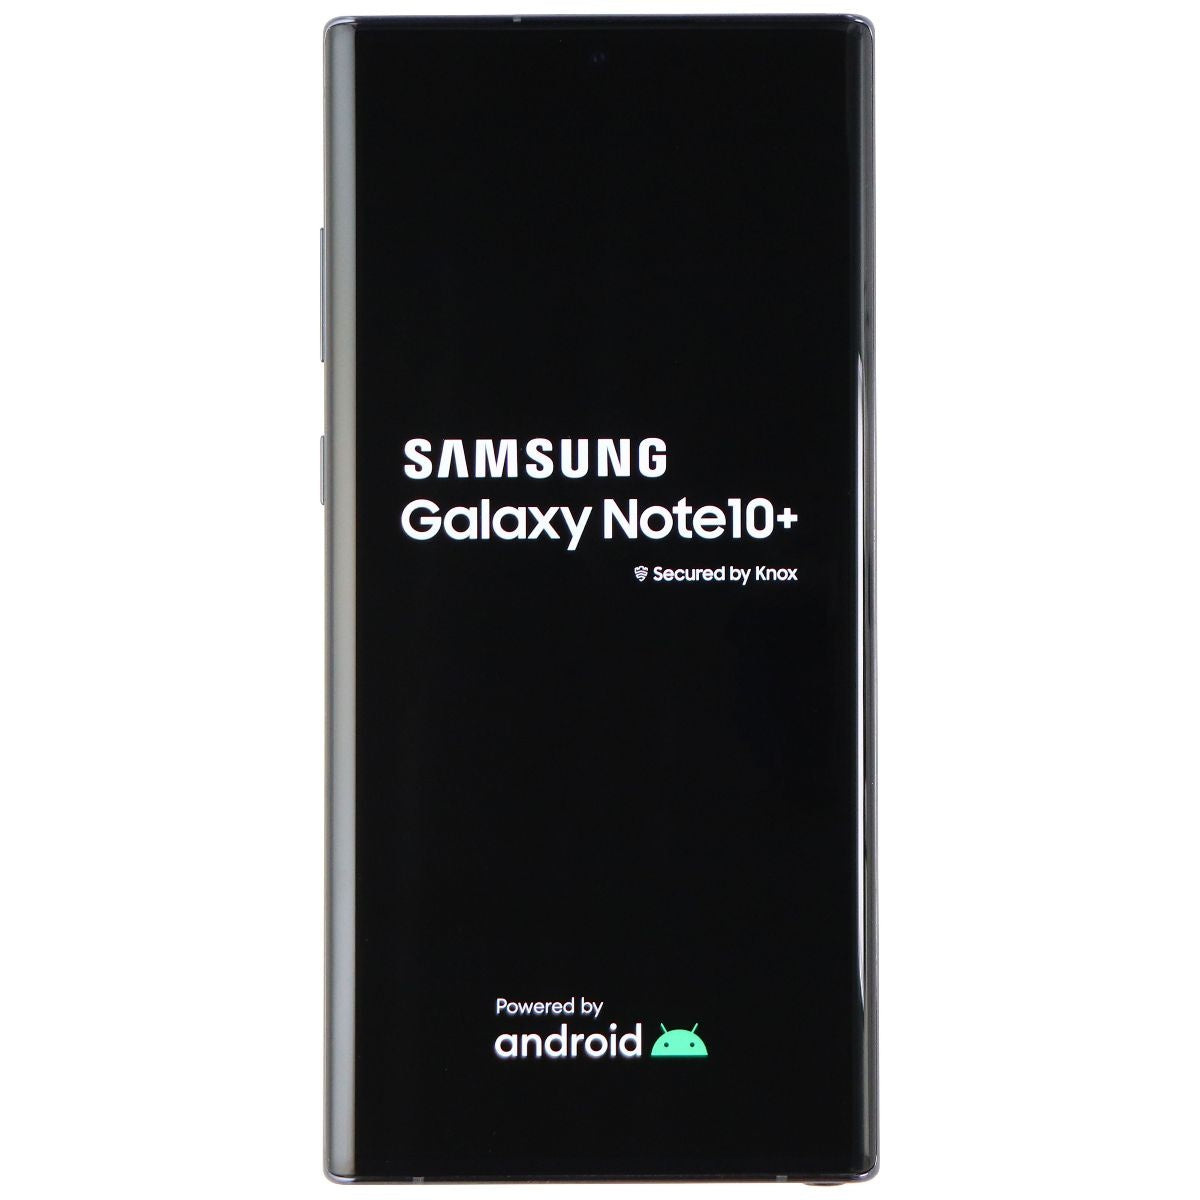 Samsung Galaxy Note10+ (SM-N975U) GSM + CDMA - 256GB/Black / BAD S PEN Cell Phones & Smartphones Samsung    - Simple Cell Bulk Wholesale Pricing - USA Seller